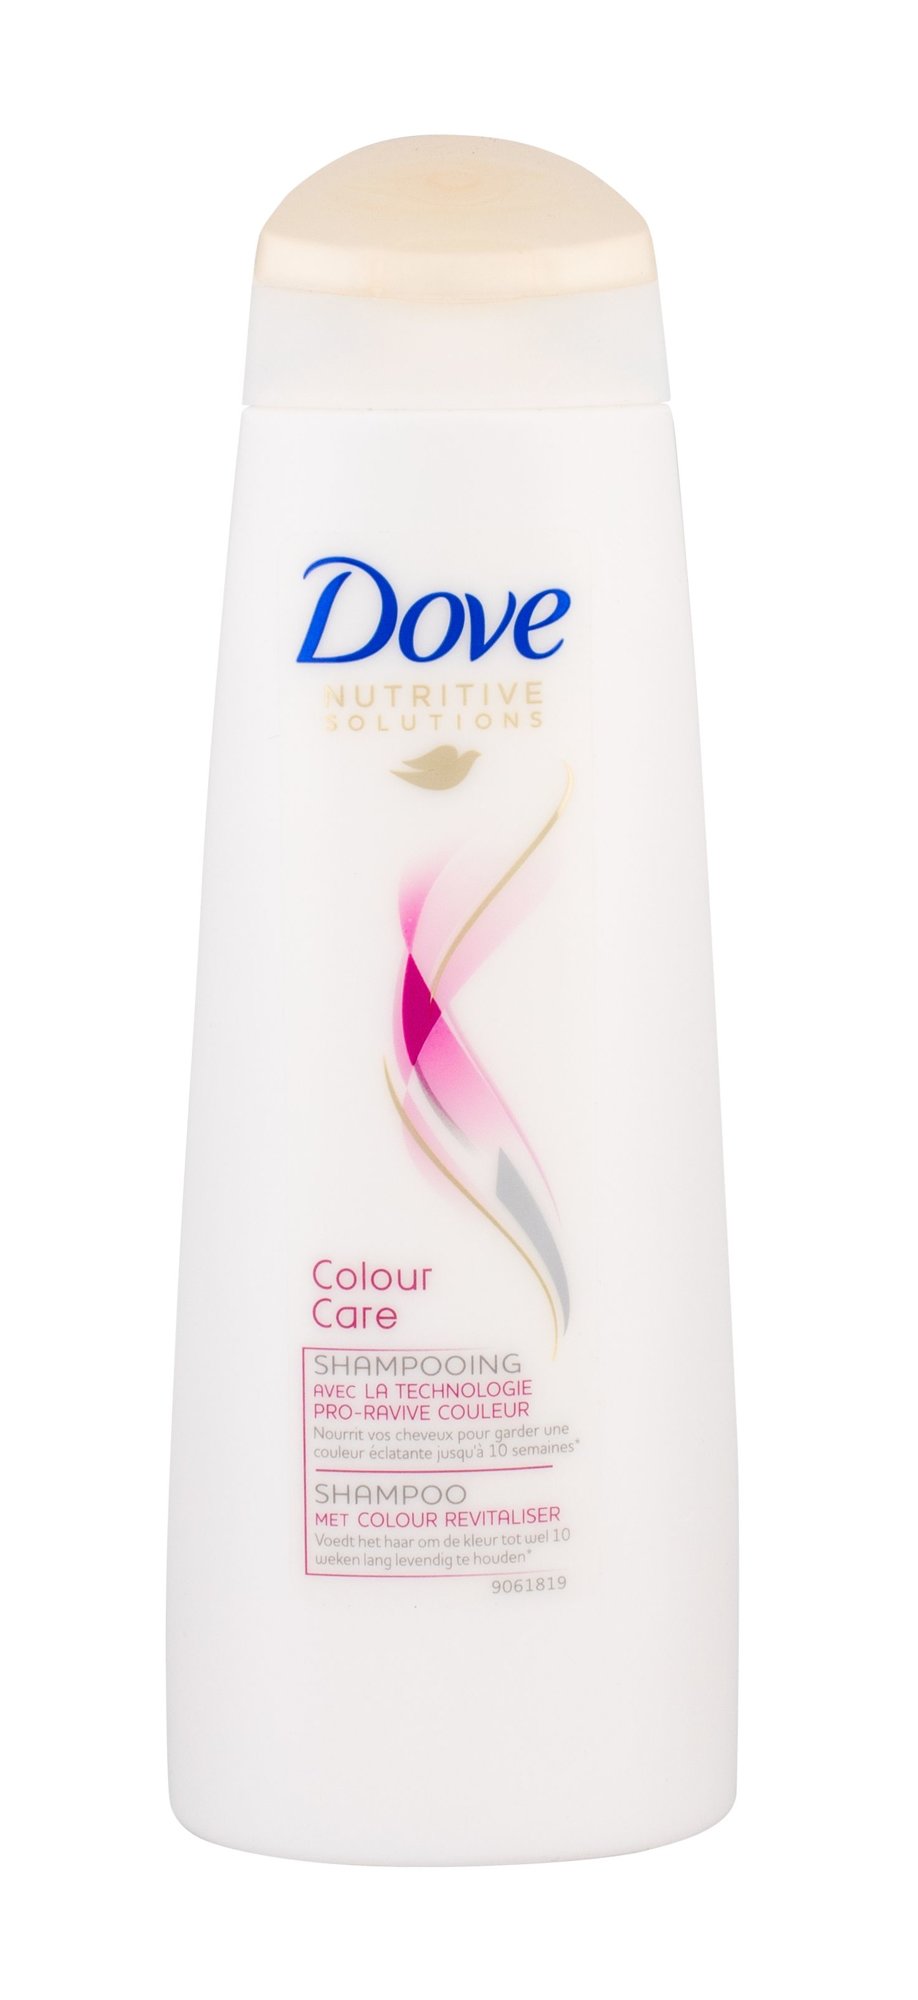 Dove Nutritive Solutions Colour Care šampūnas